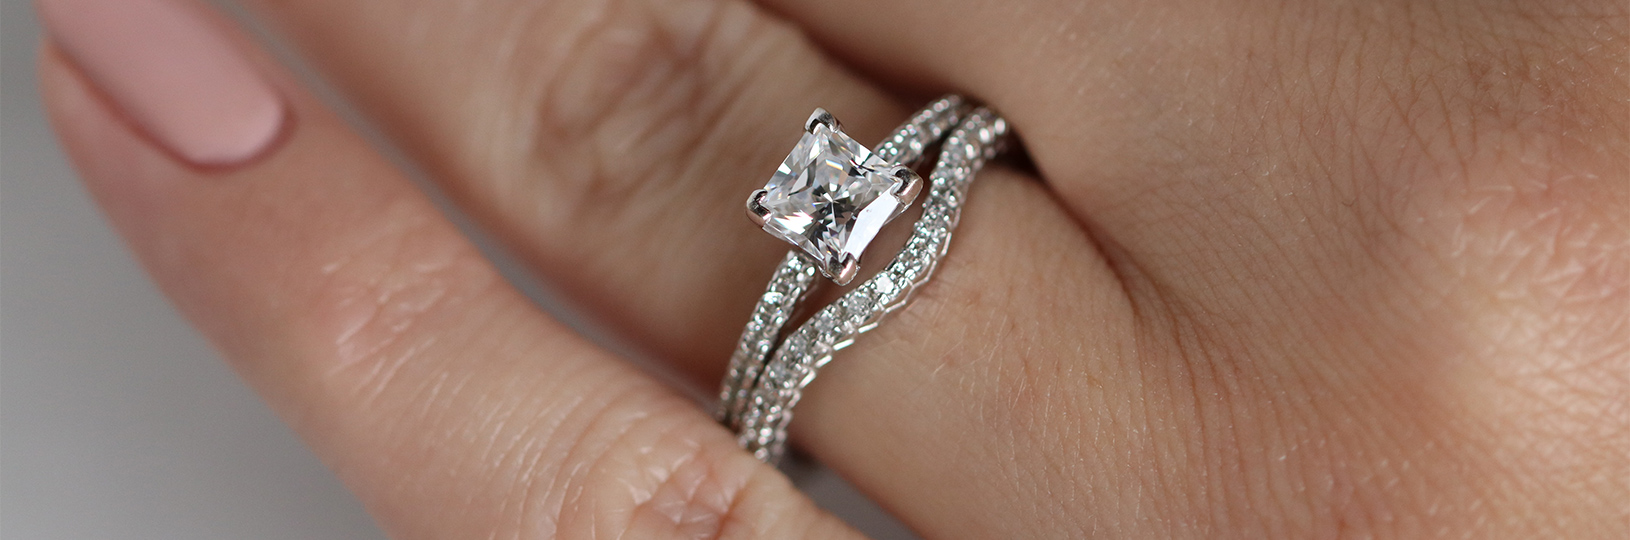 Simulated diamond wedding ring set